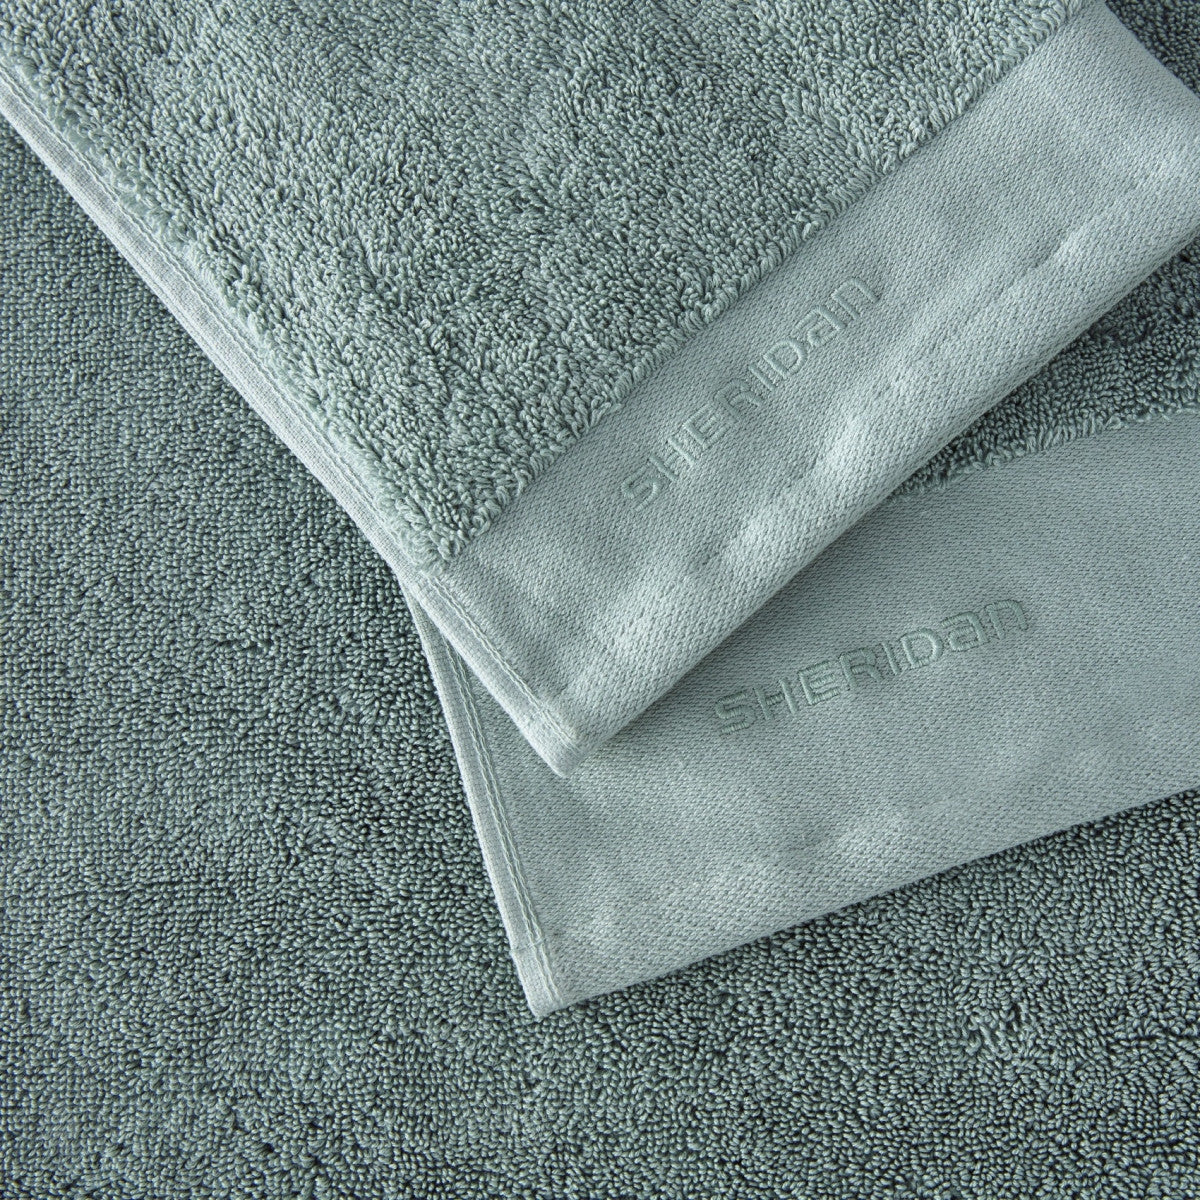 Luxury Retreat Sea Green Towel Collection by Sheridan